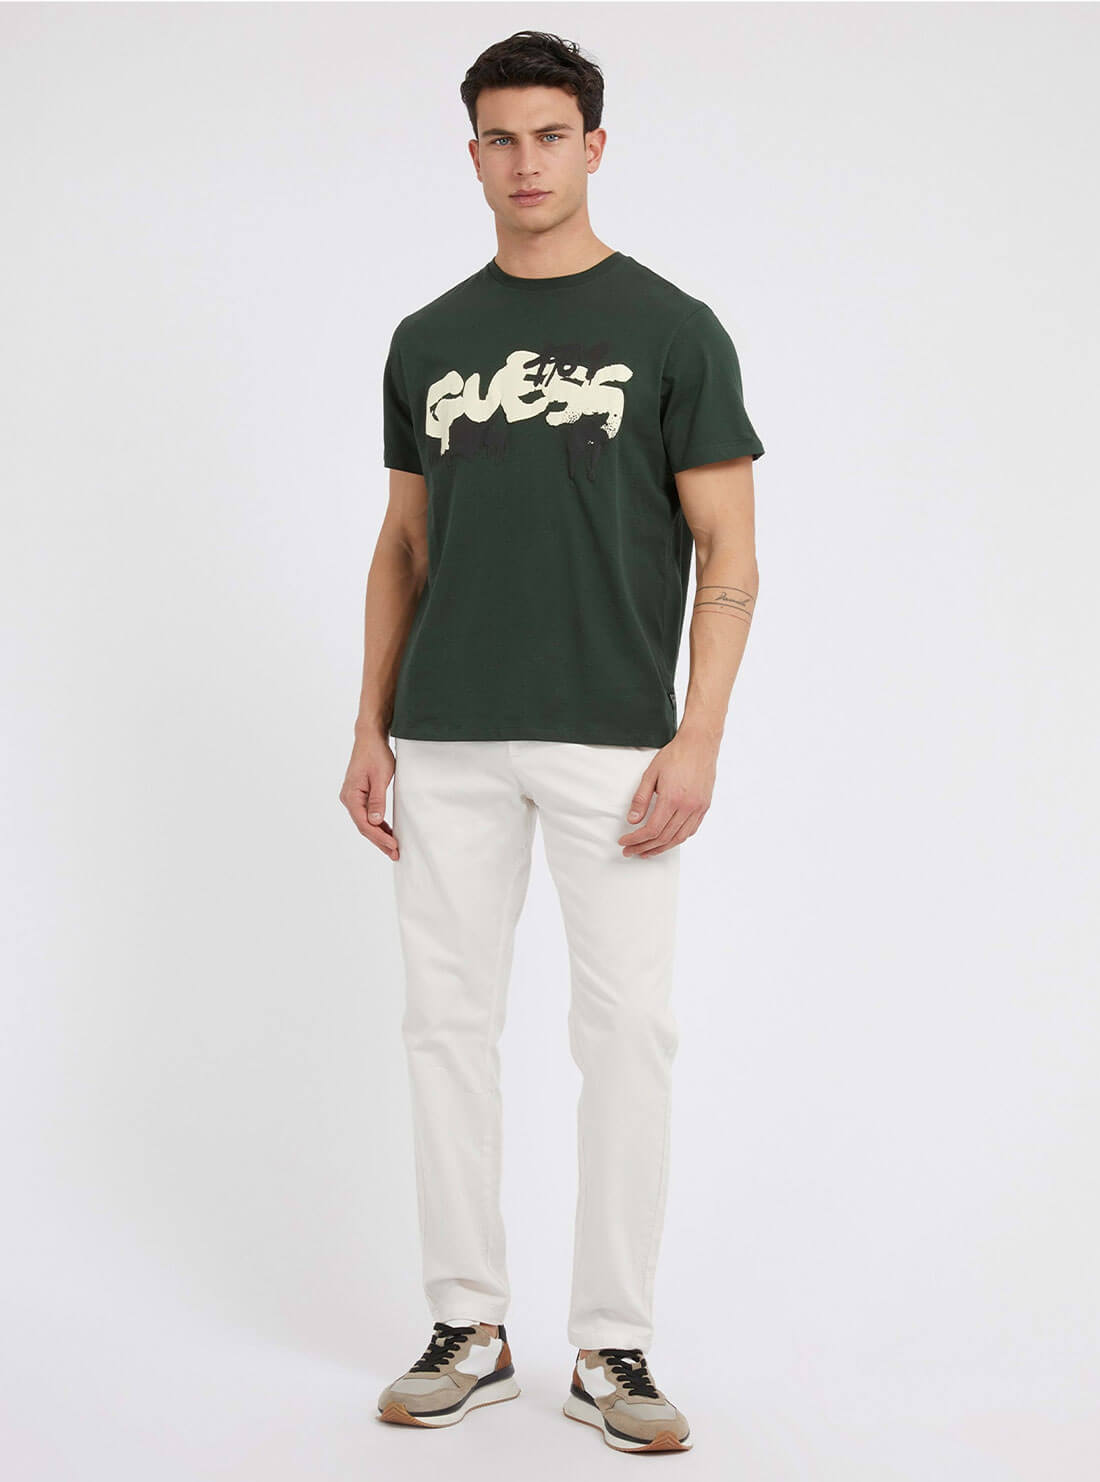 Eco Green Graffiti Logo T-Shirt | GUESS Men's Apparel | full view